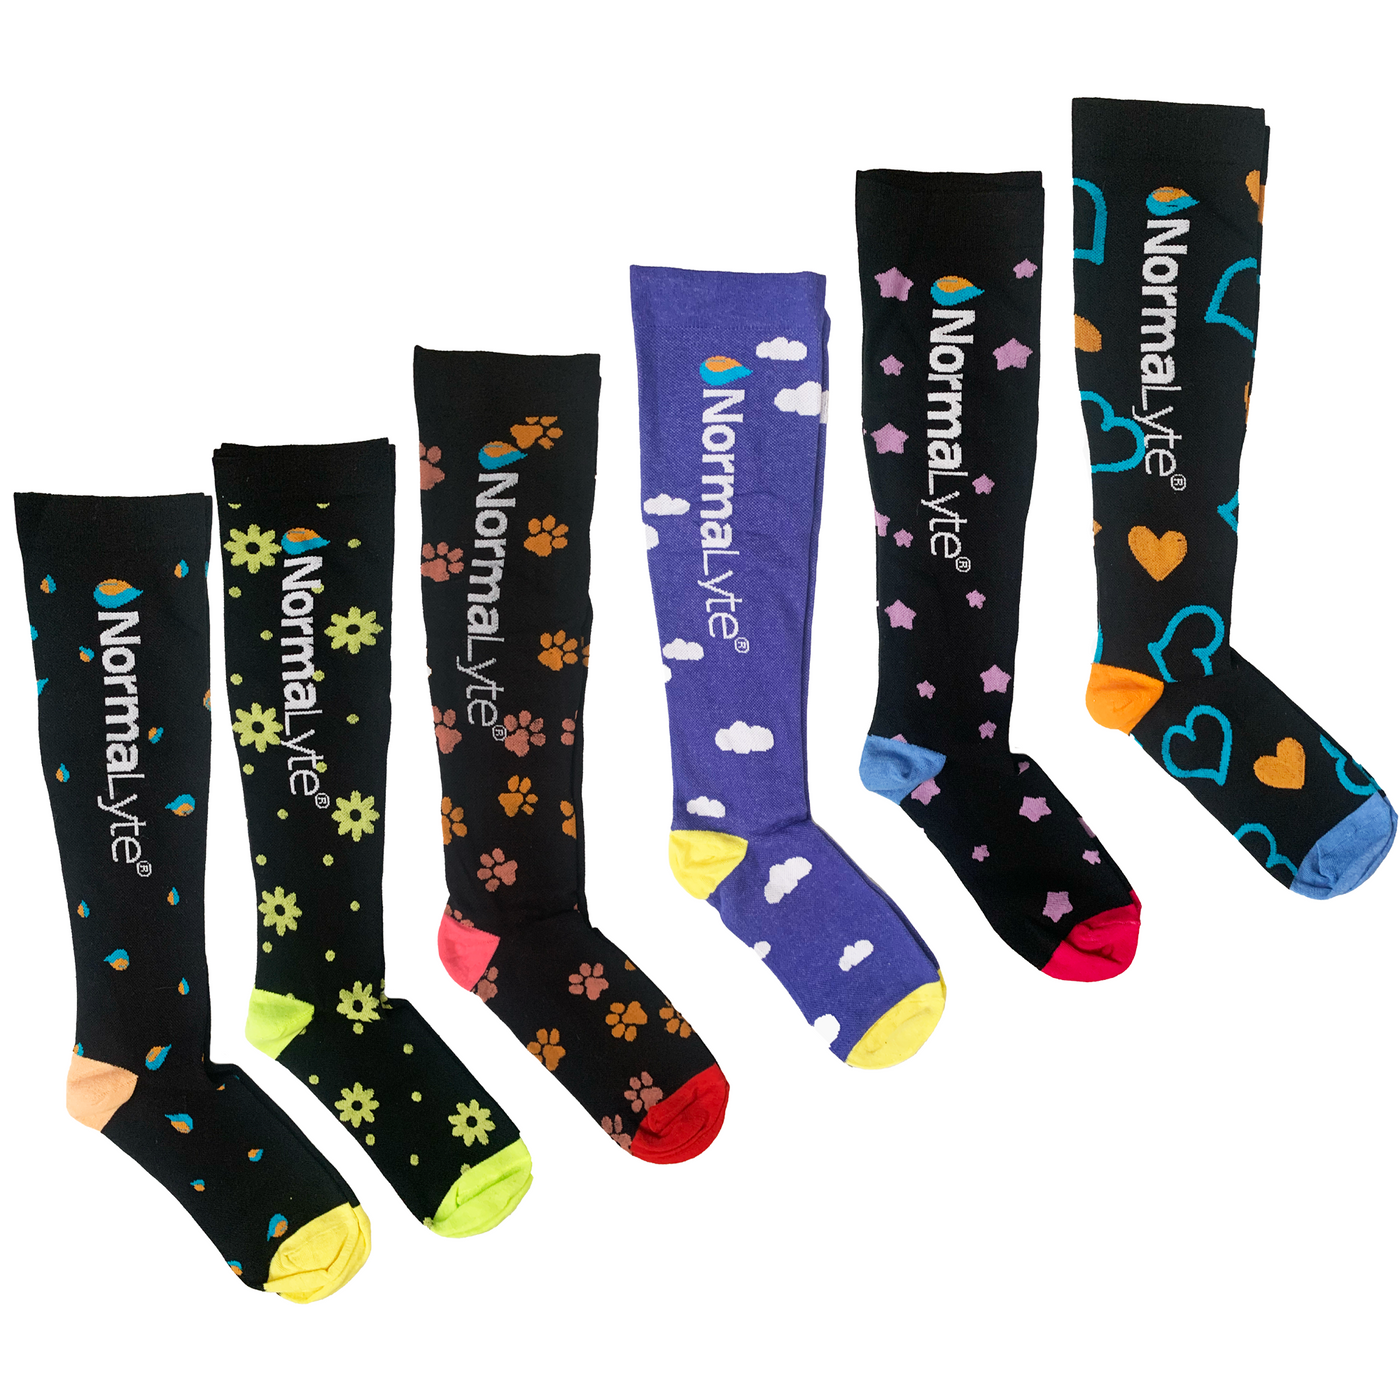 3-Pack of Fun Graduated Compression Socks (Random Selection): 20